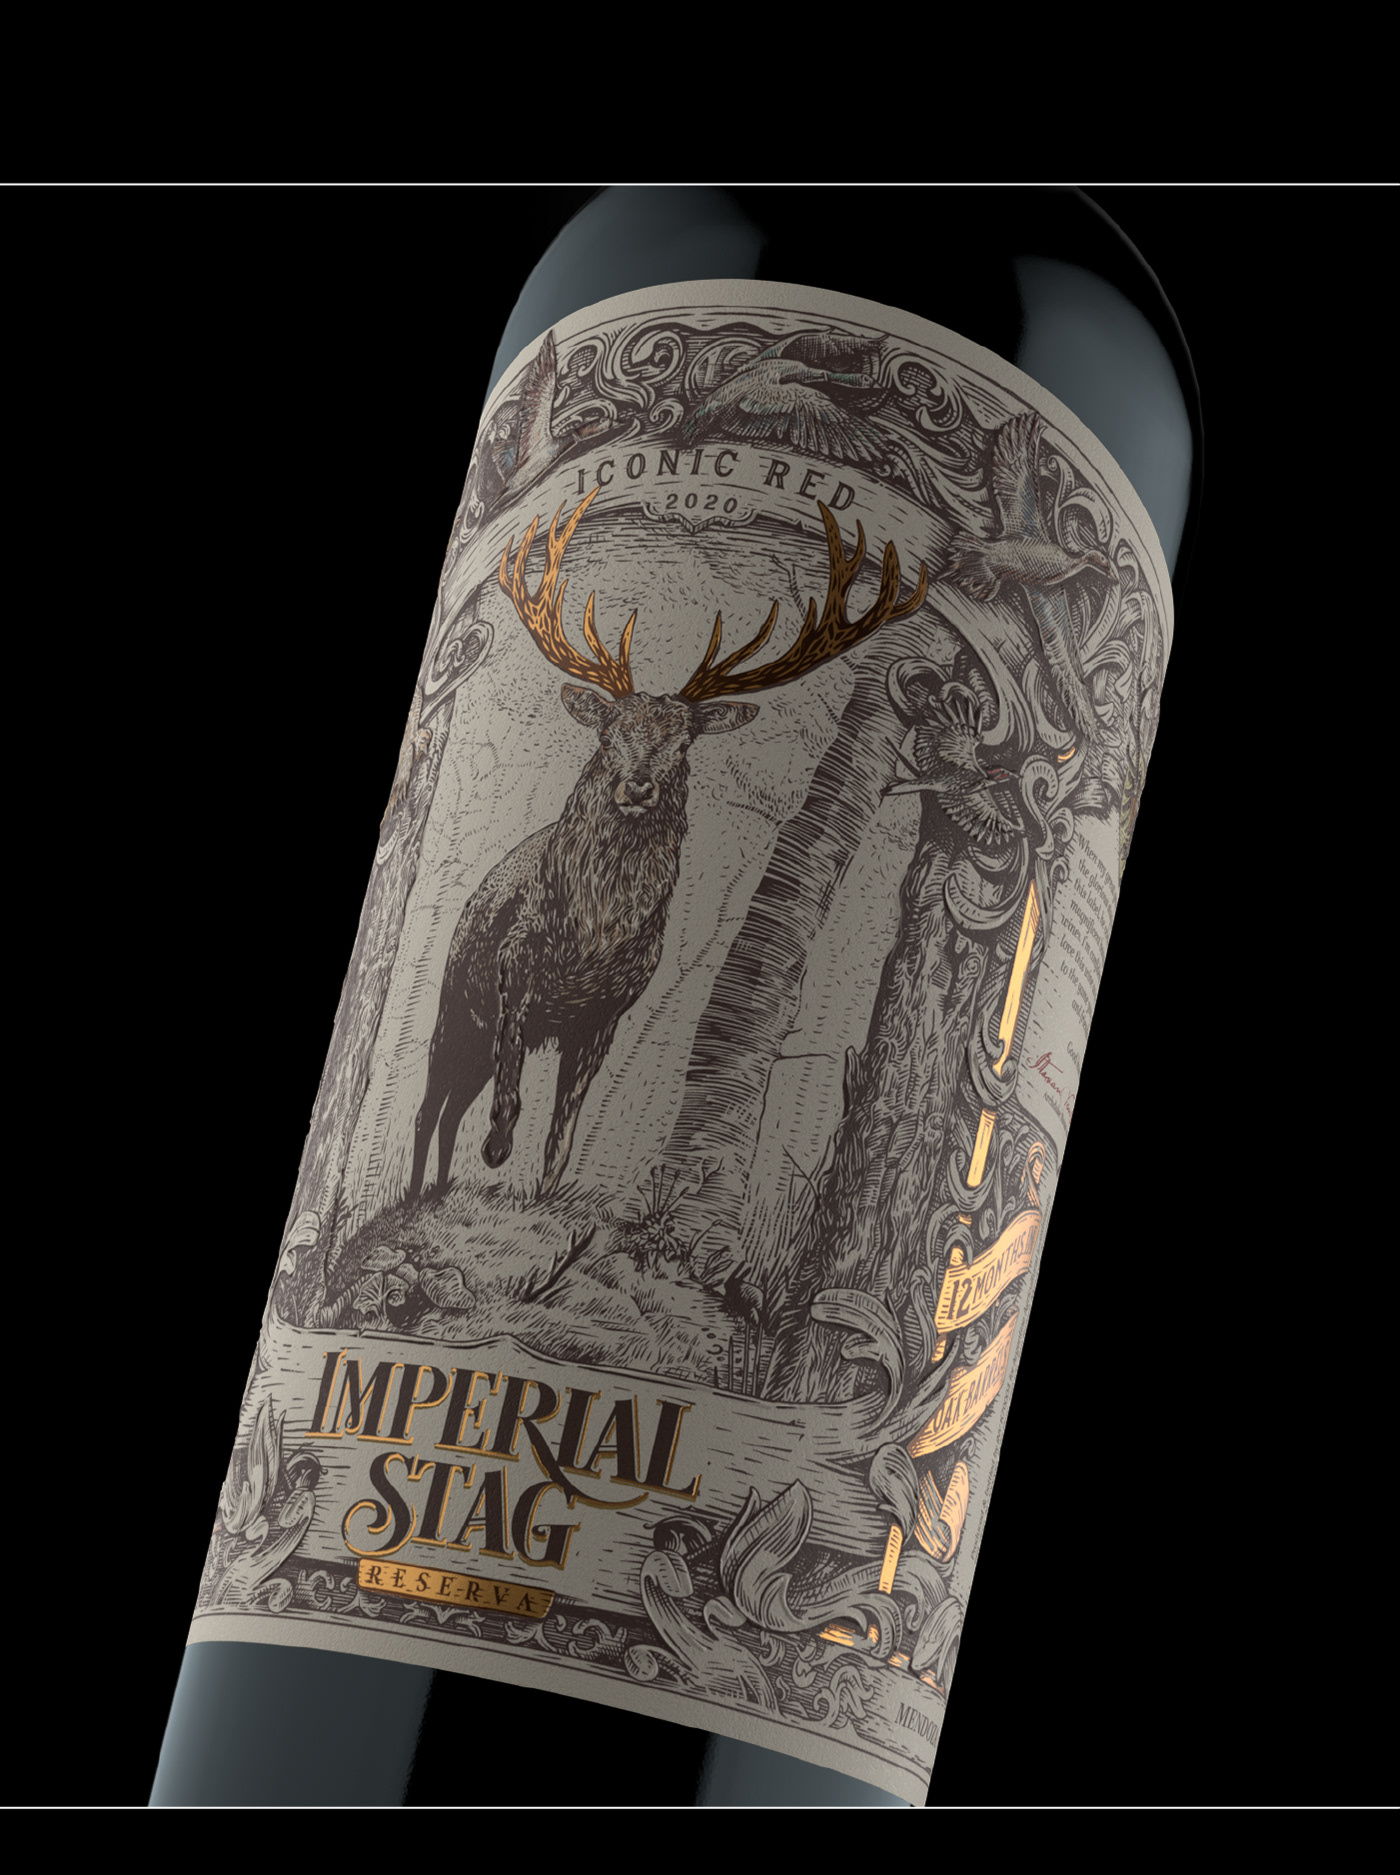 argo ciervo deer imperial Label label wine Packaging stag wine